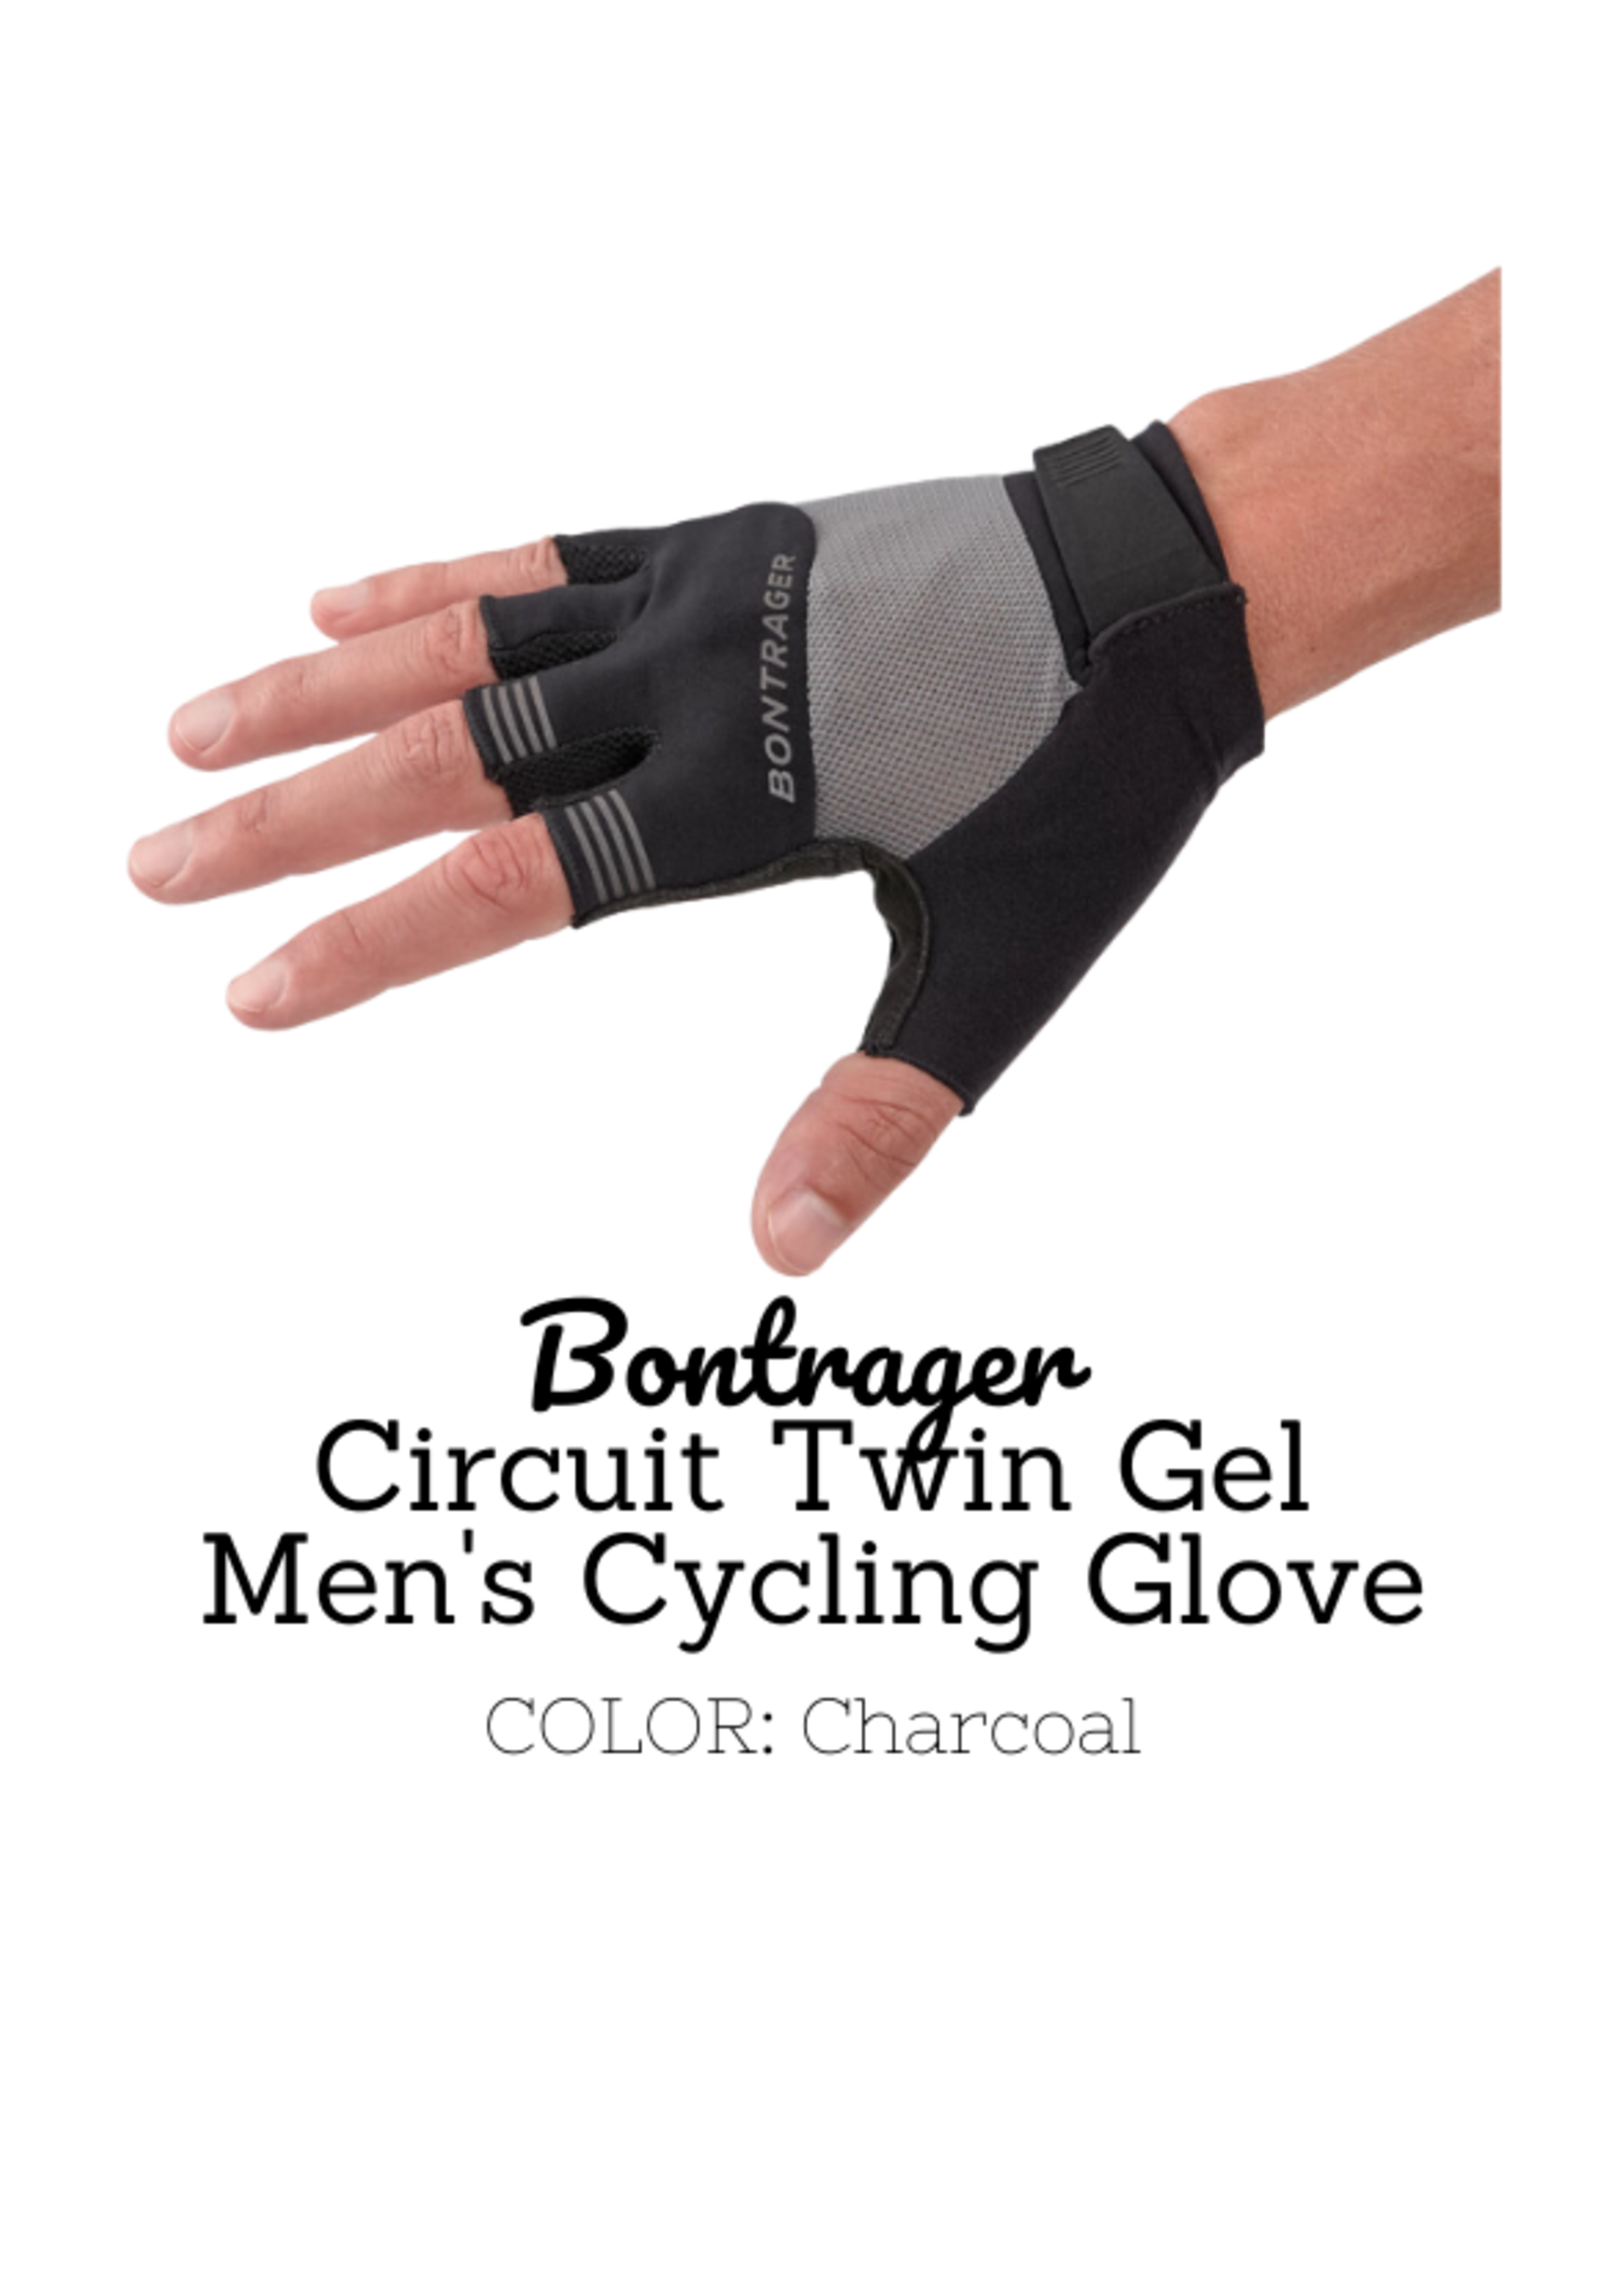 BONTRAGER Bontrager Circuit Twin Gel Cycling Glove